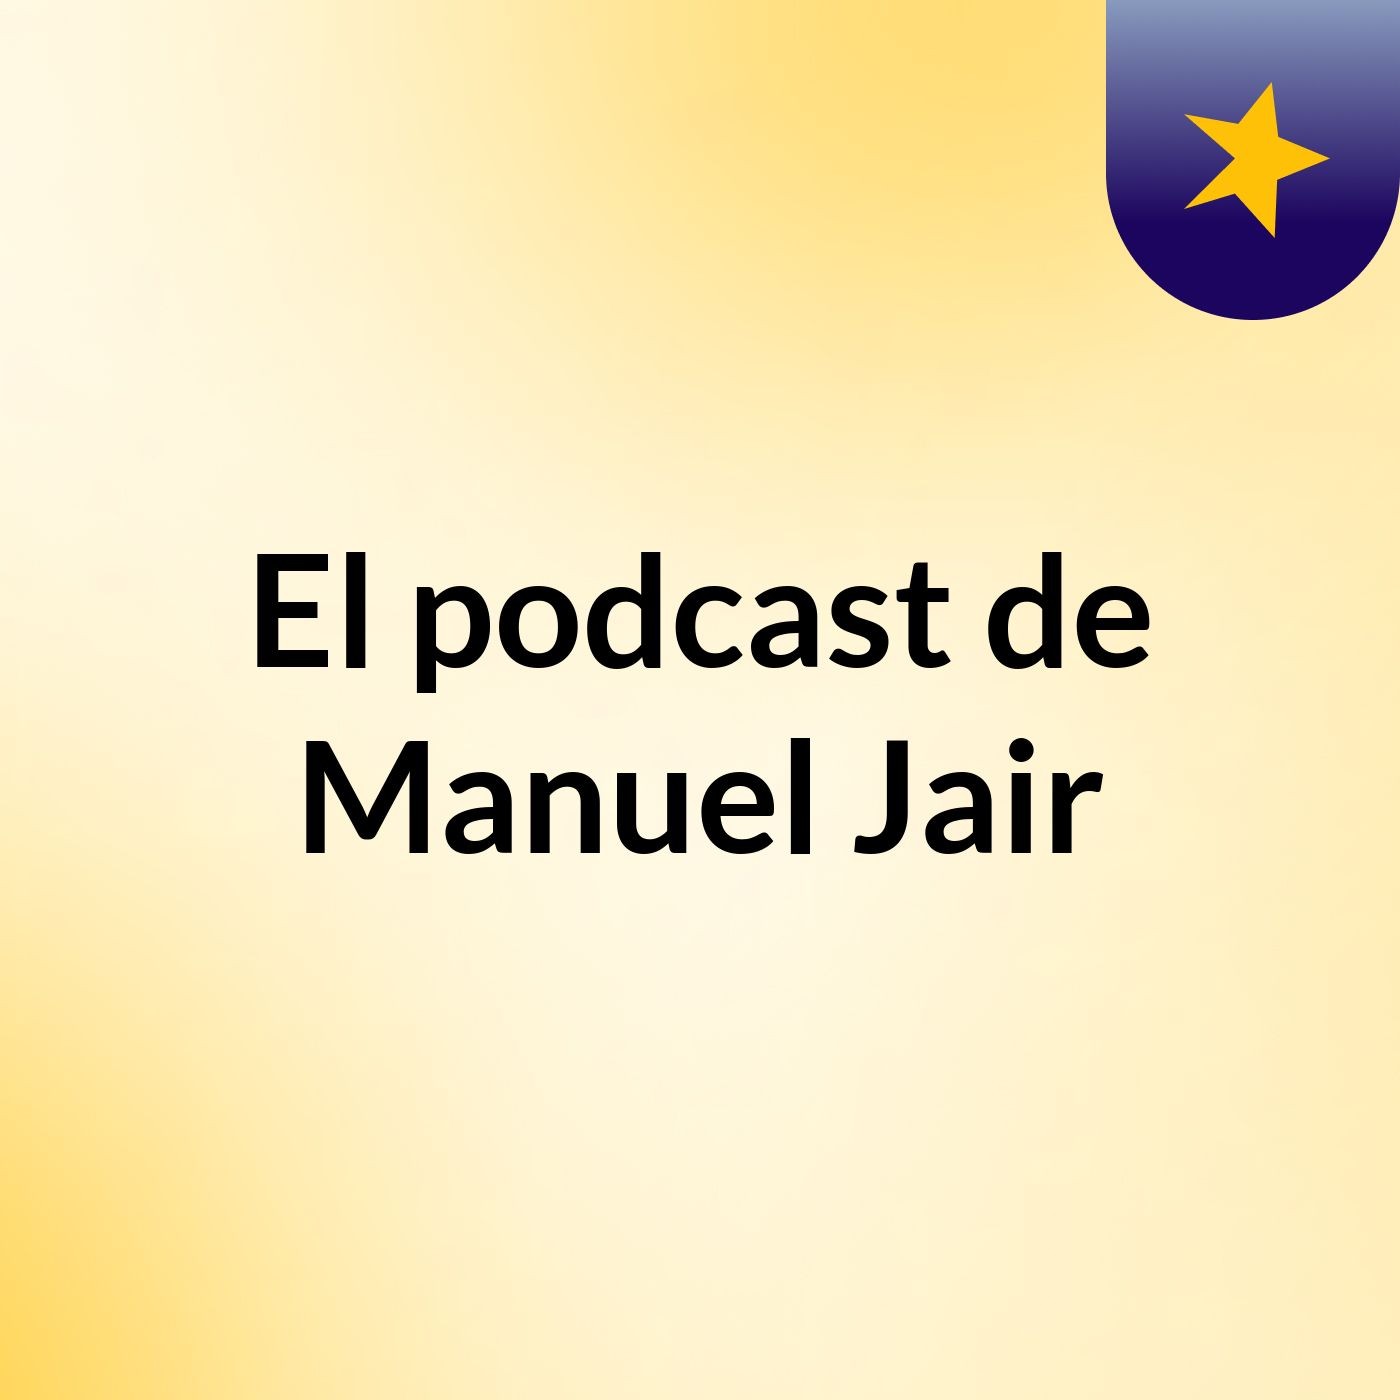 Episodio 2 - El podcast de Manuel Jair